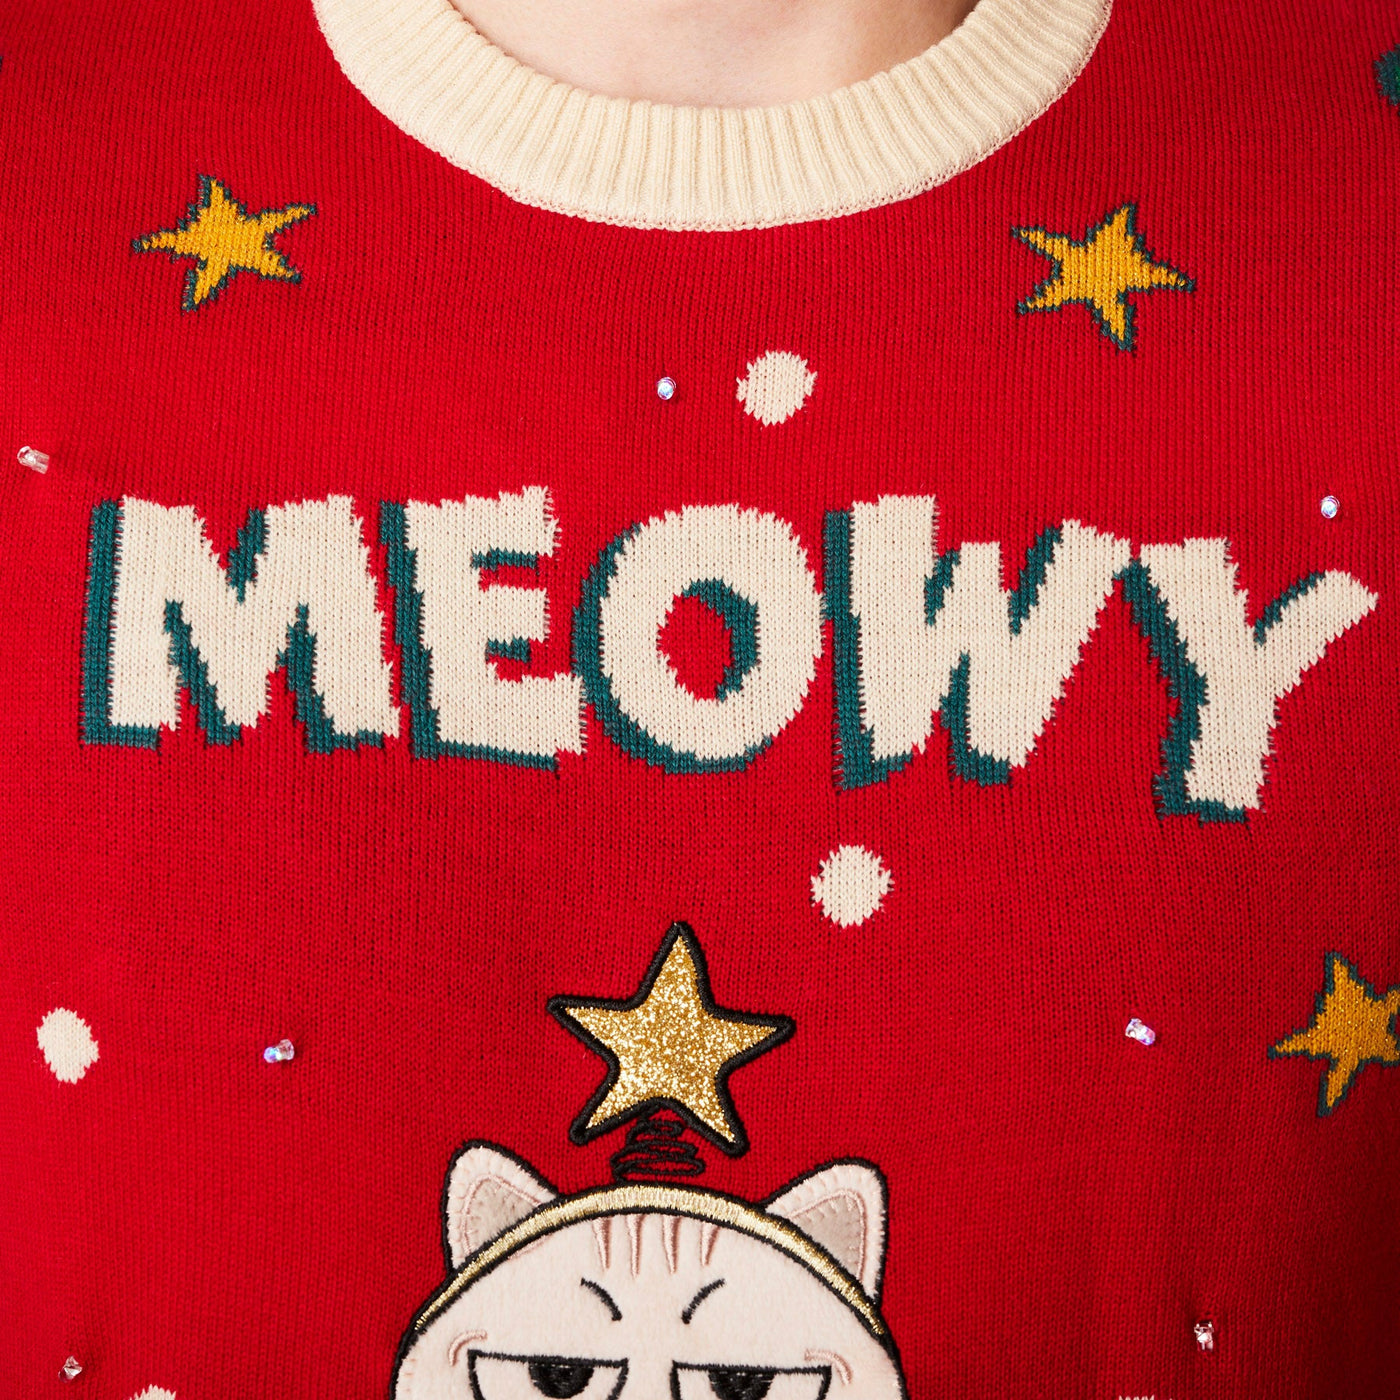 Women's Meowy Christmas Christmas Sweater